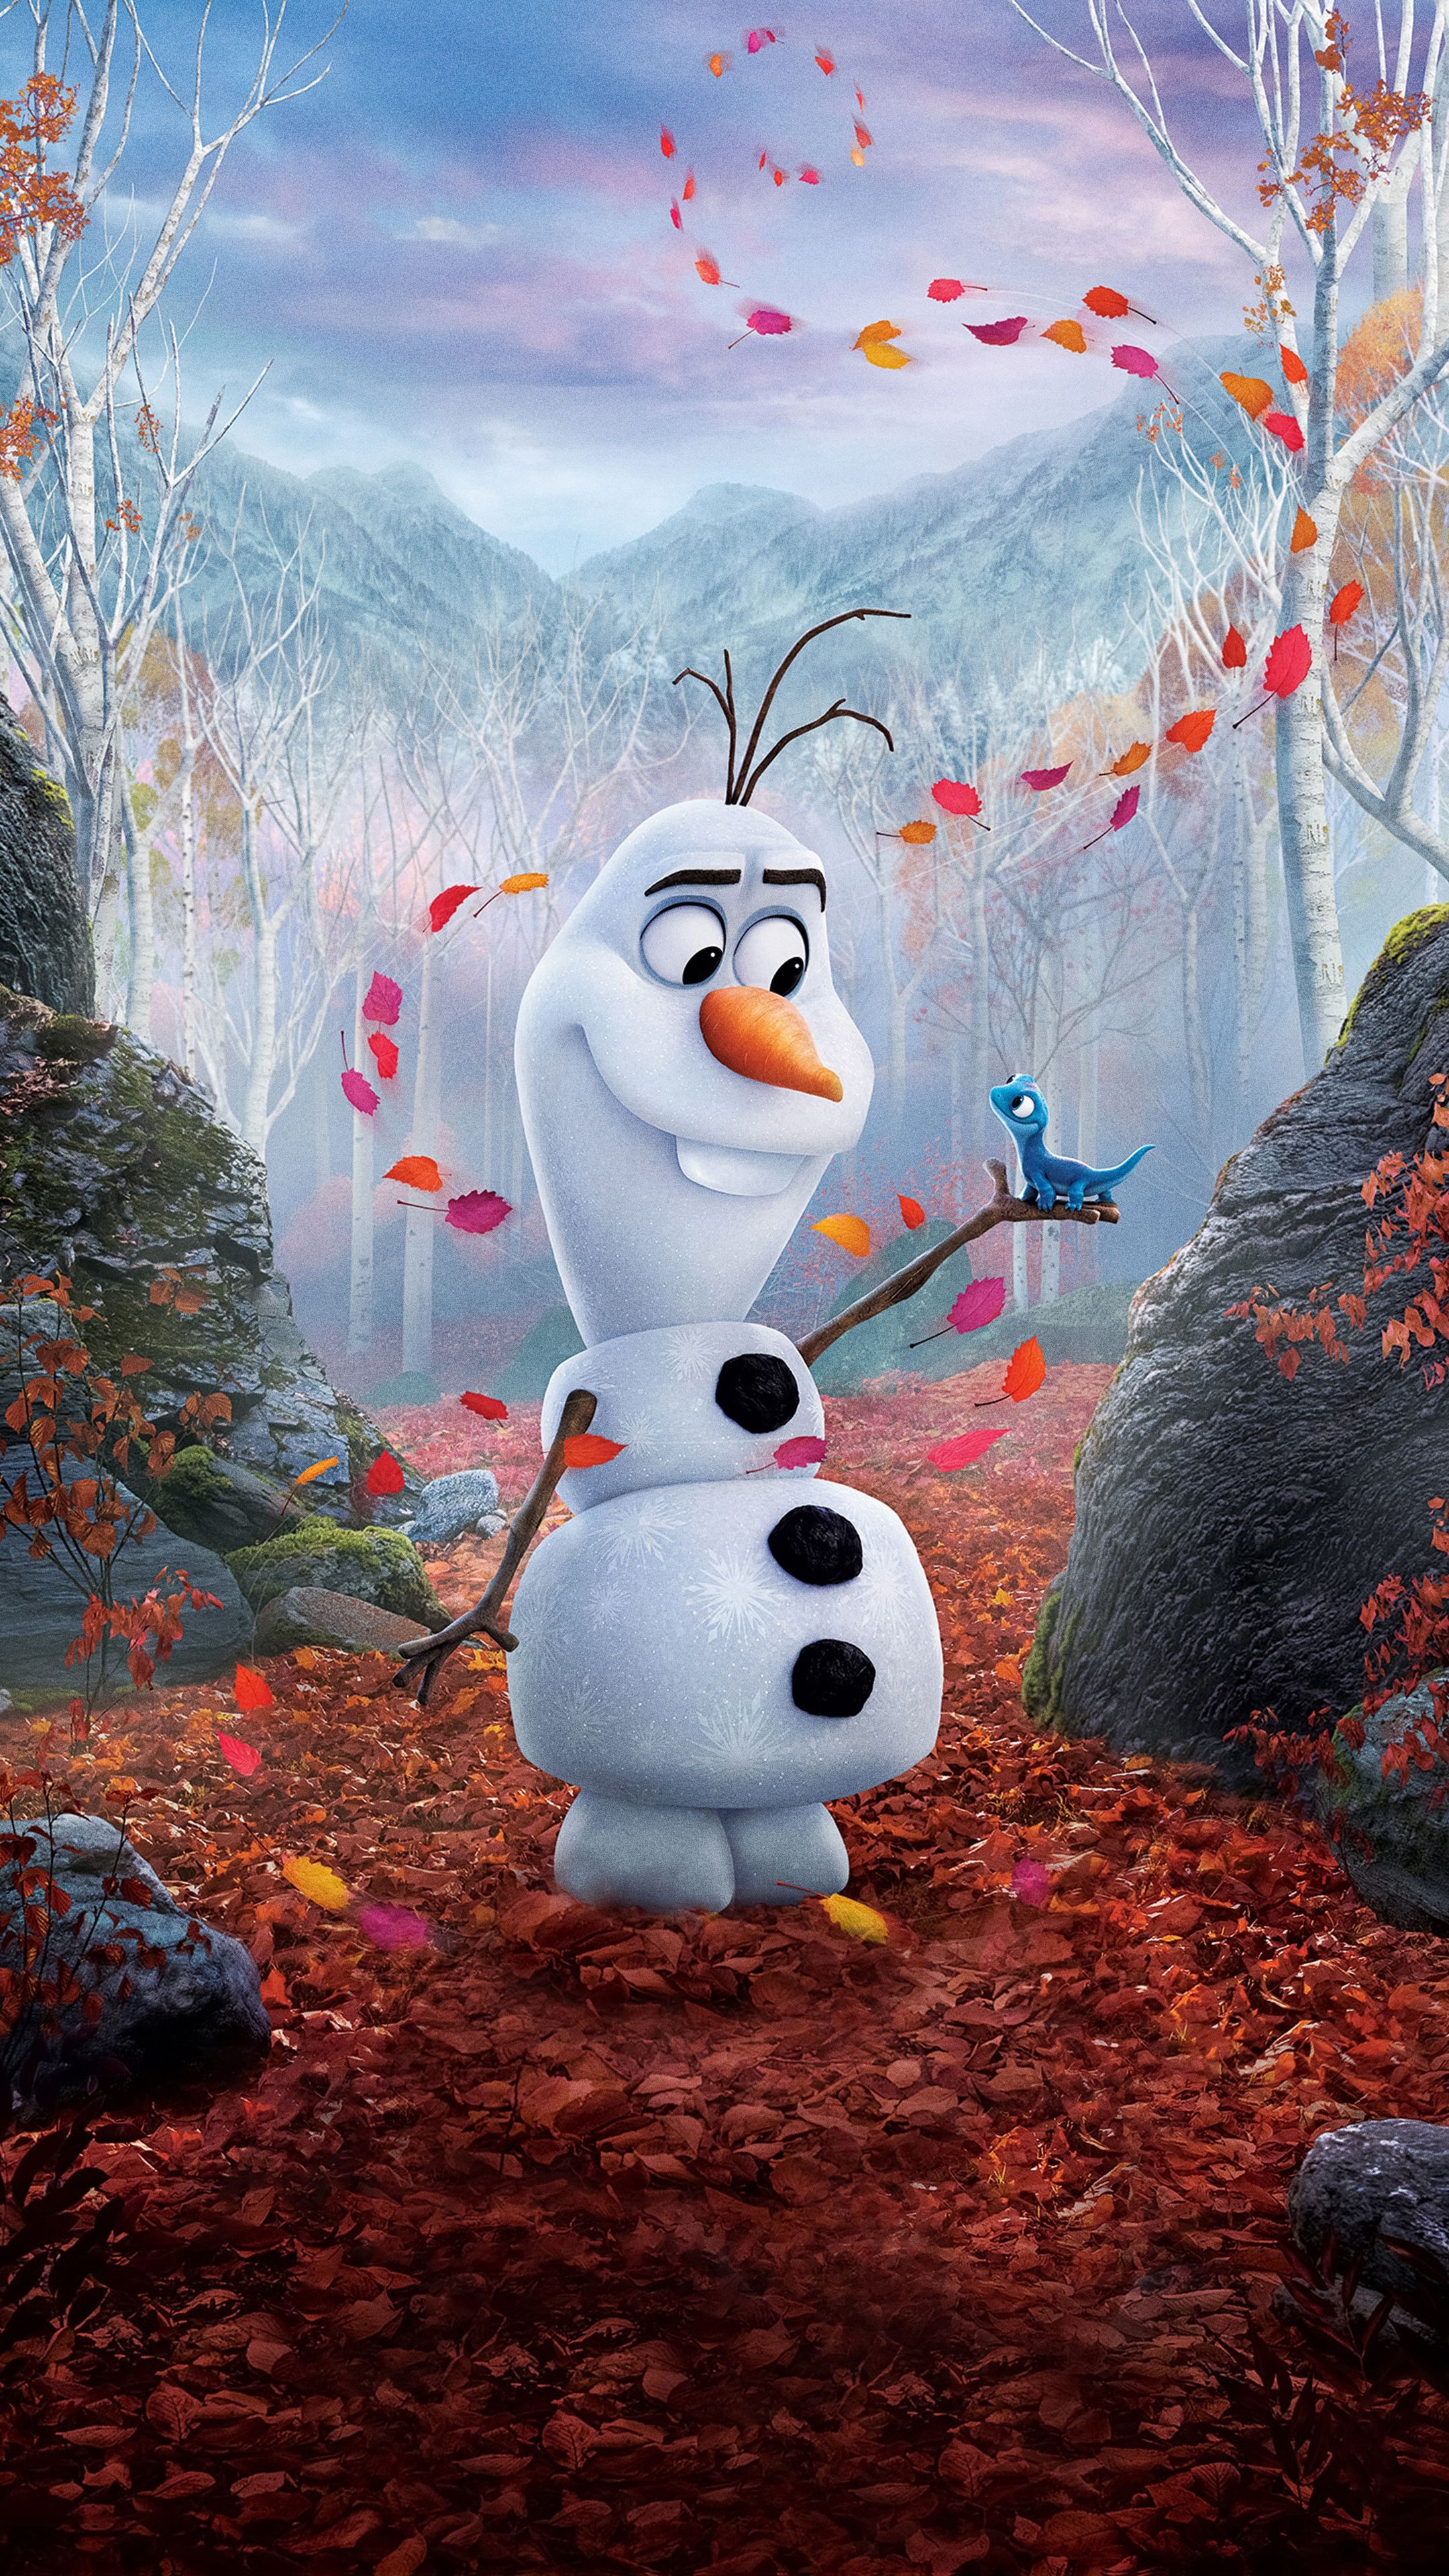 Disney Animation, Olaf in Frozen 2, High-resolution wallpaper, Disney character, 2160x3840 4K Handy